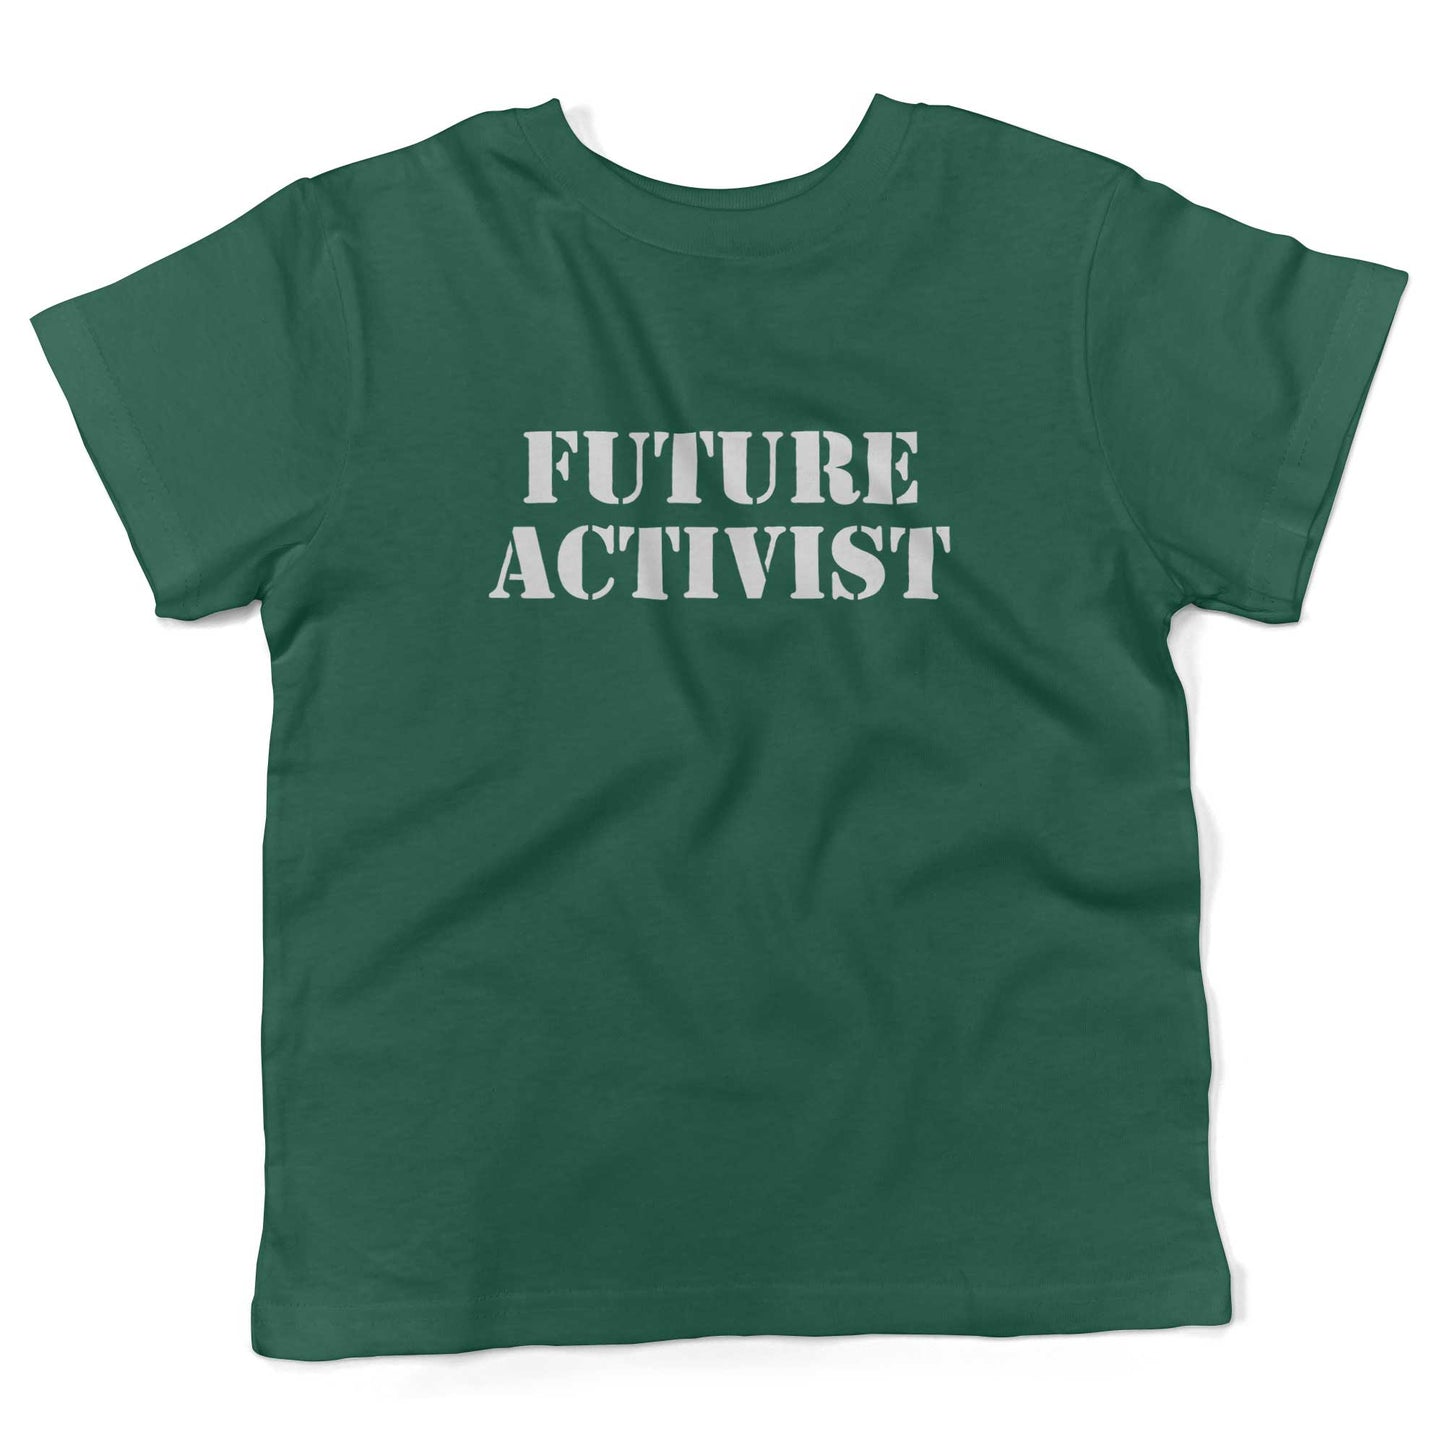 Future Activist Toddler Shirt-Kelly Green-2T